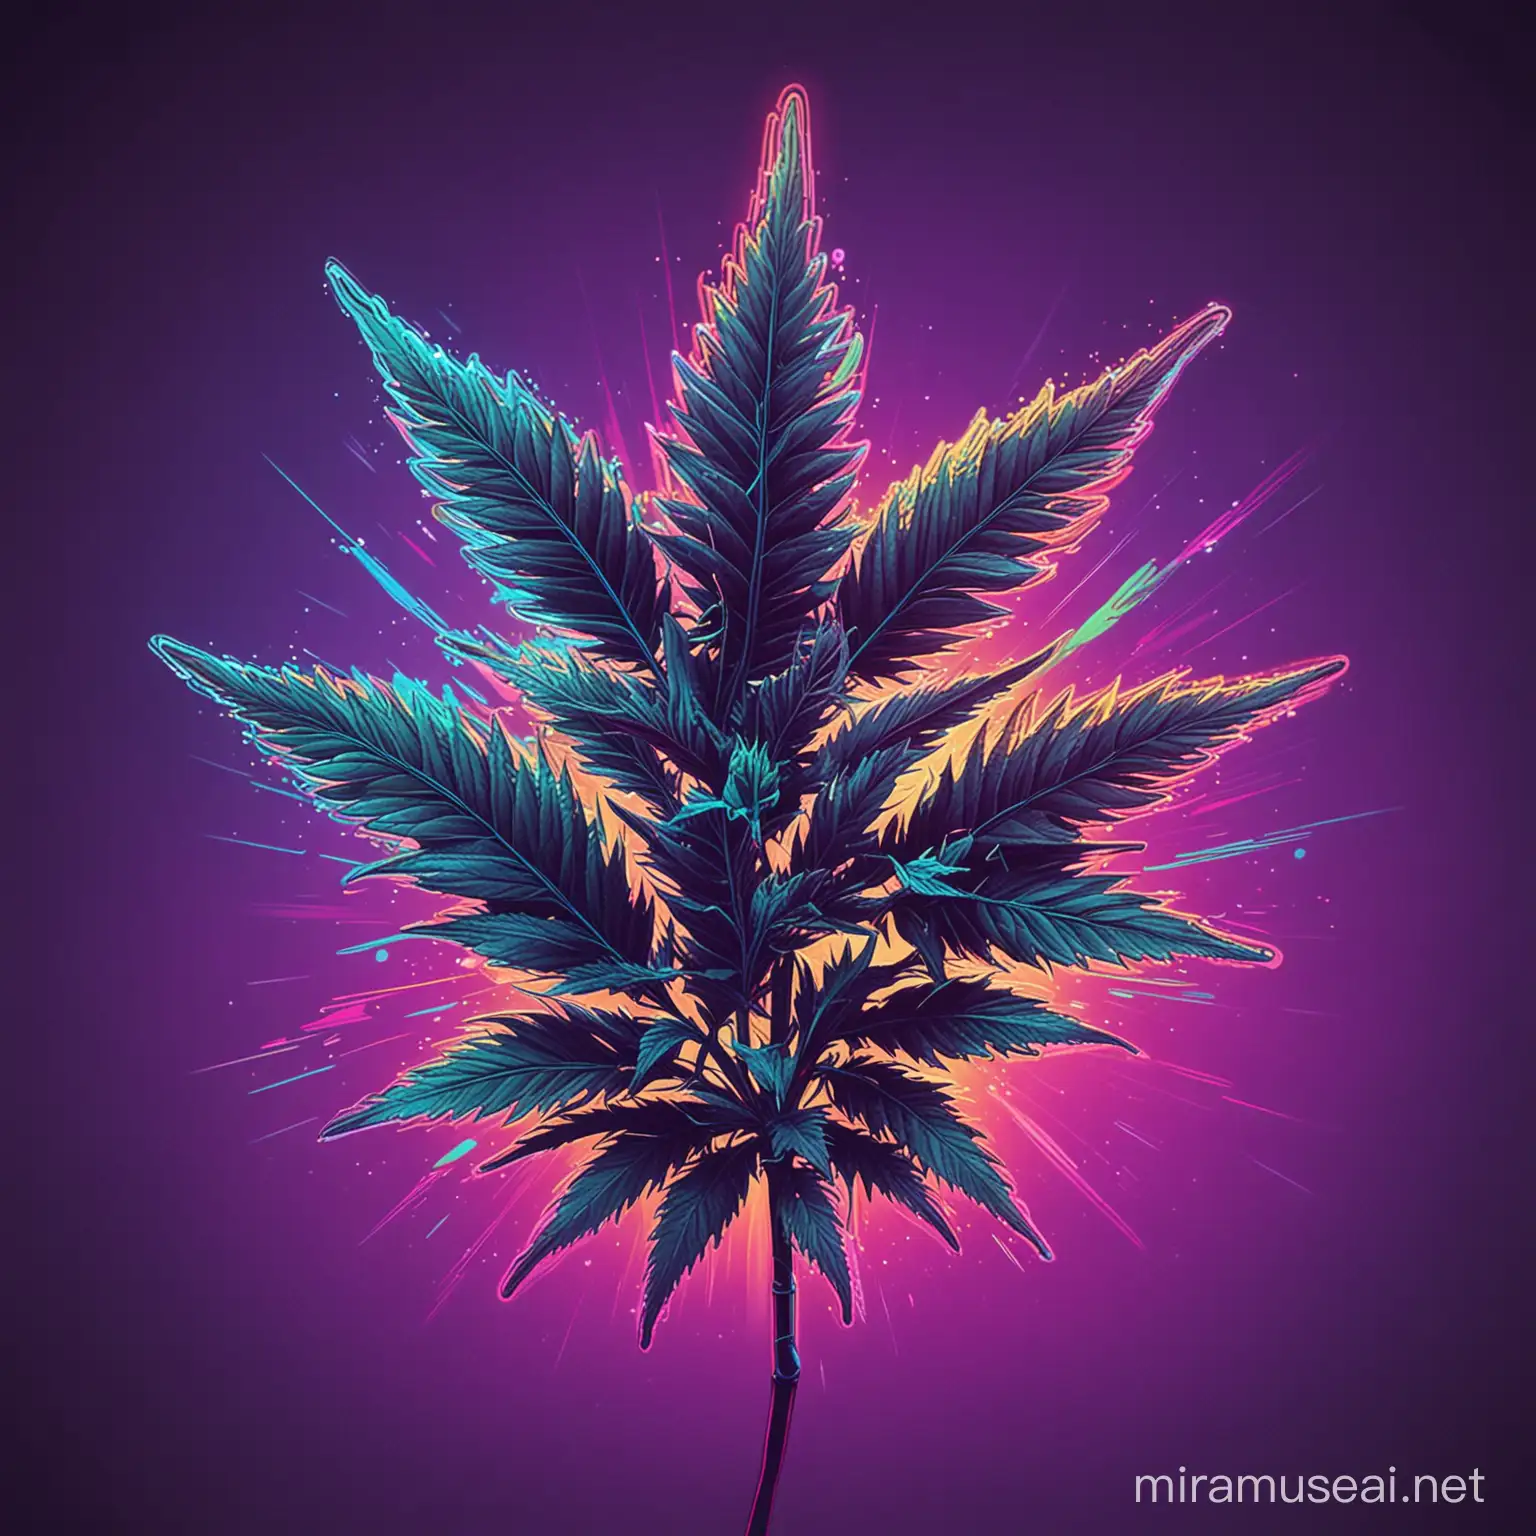 Neon Synthwave Cannabis Wallpaper Vibrant Weed and Marijuana Illustration